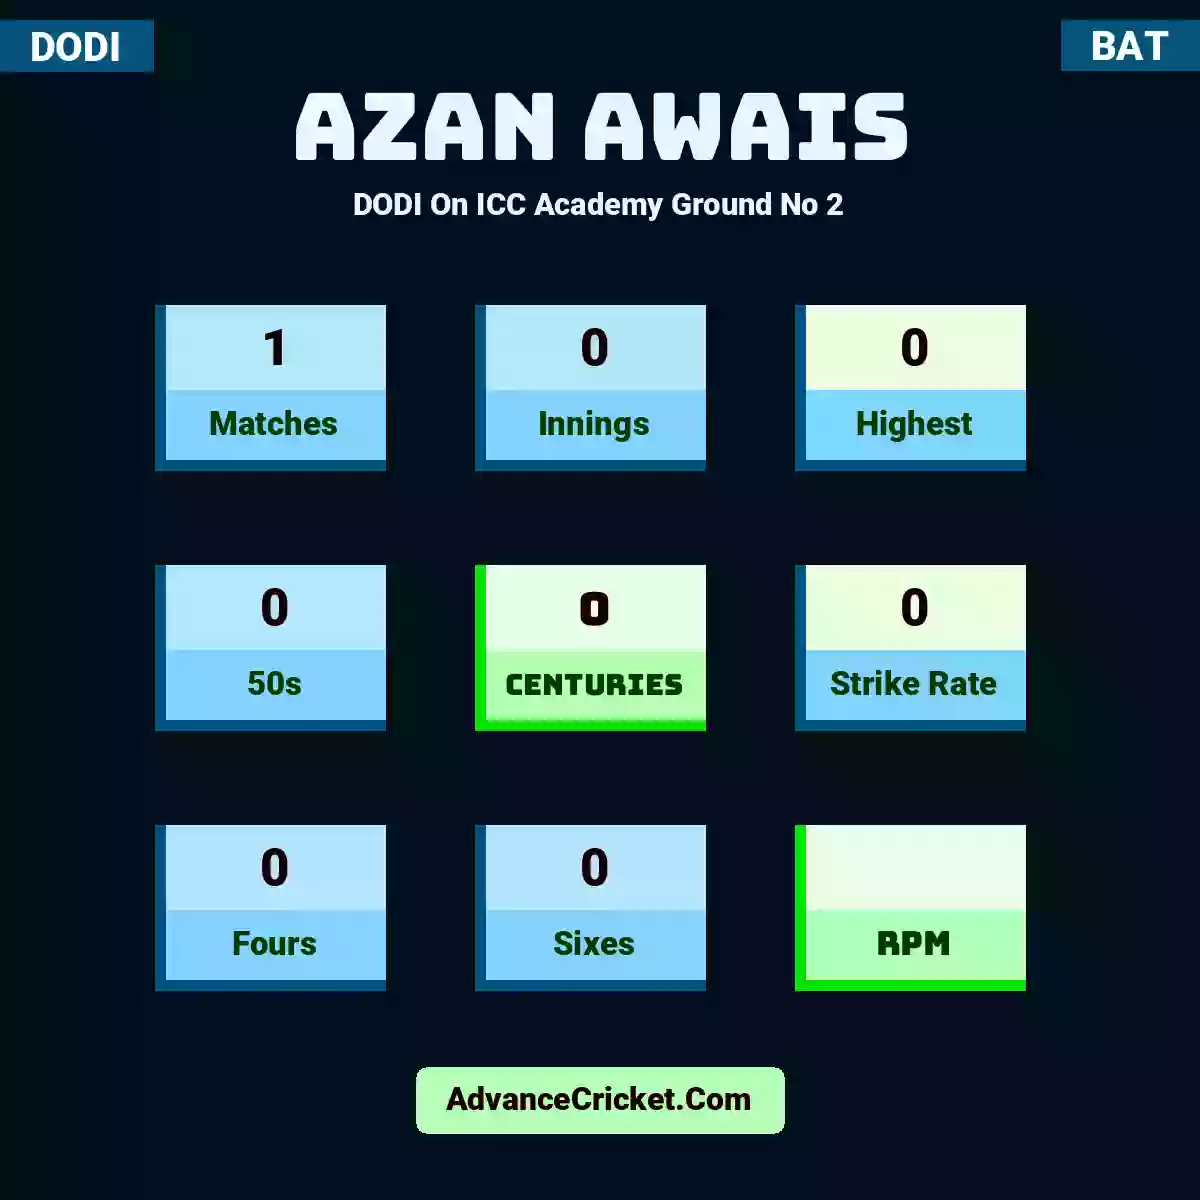 Azan Awais DODI  On ICC Academy Ground No 2, Azan Awais played 1 matches, scored 0 runs as highest, 0 half-centuries, and 0 centuries, with a strike rate of 0. A.Awais hit 0 fours and 0 sixes.